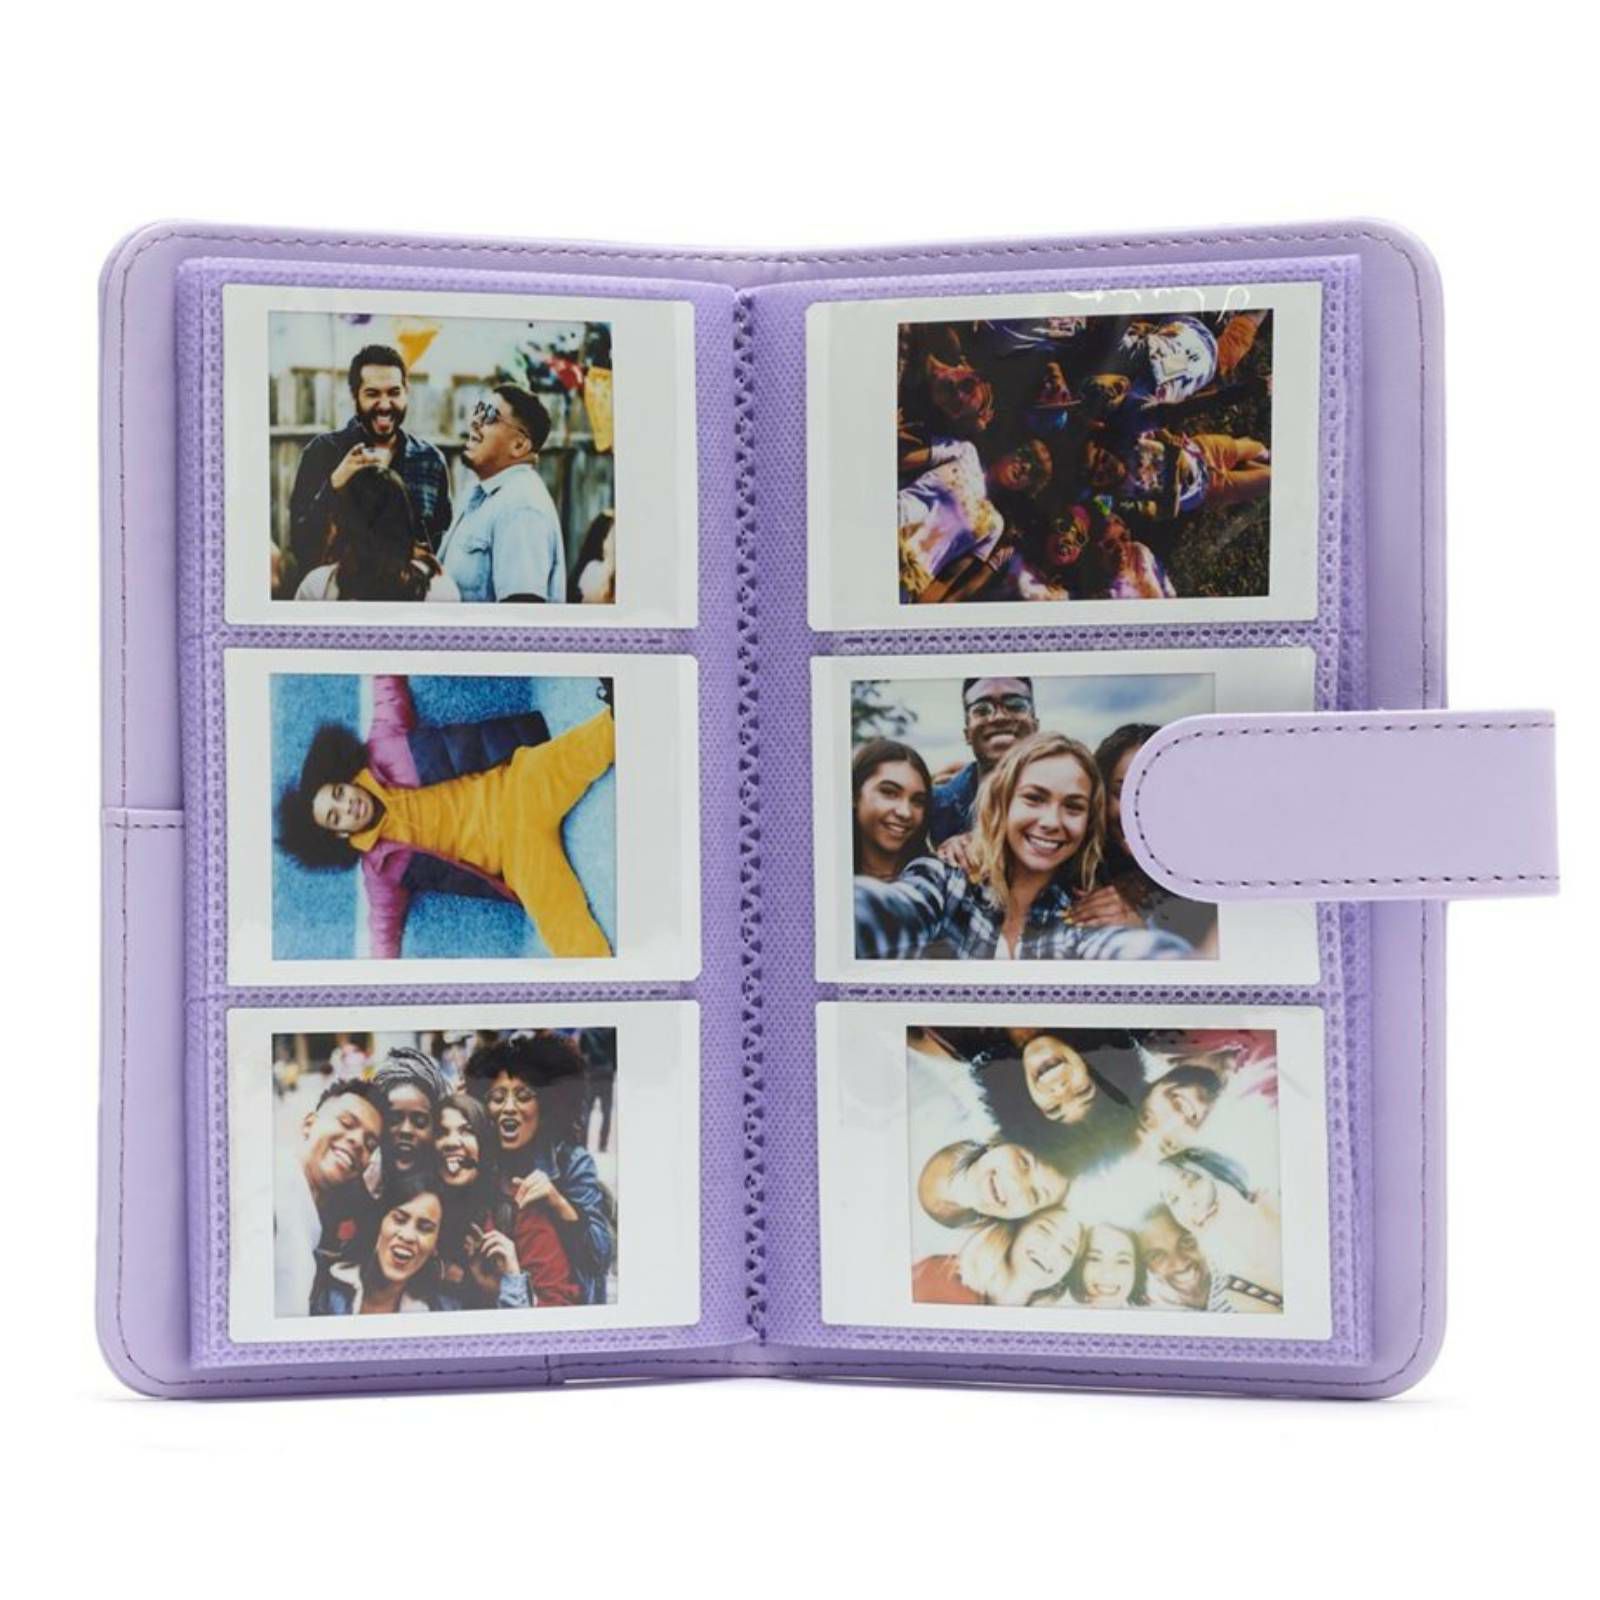 Fujifilm Instax Mini Photo Album lilac-purple